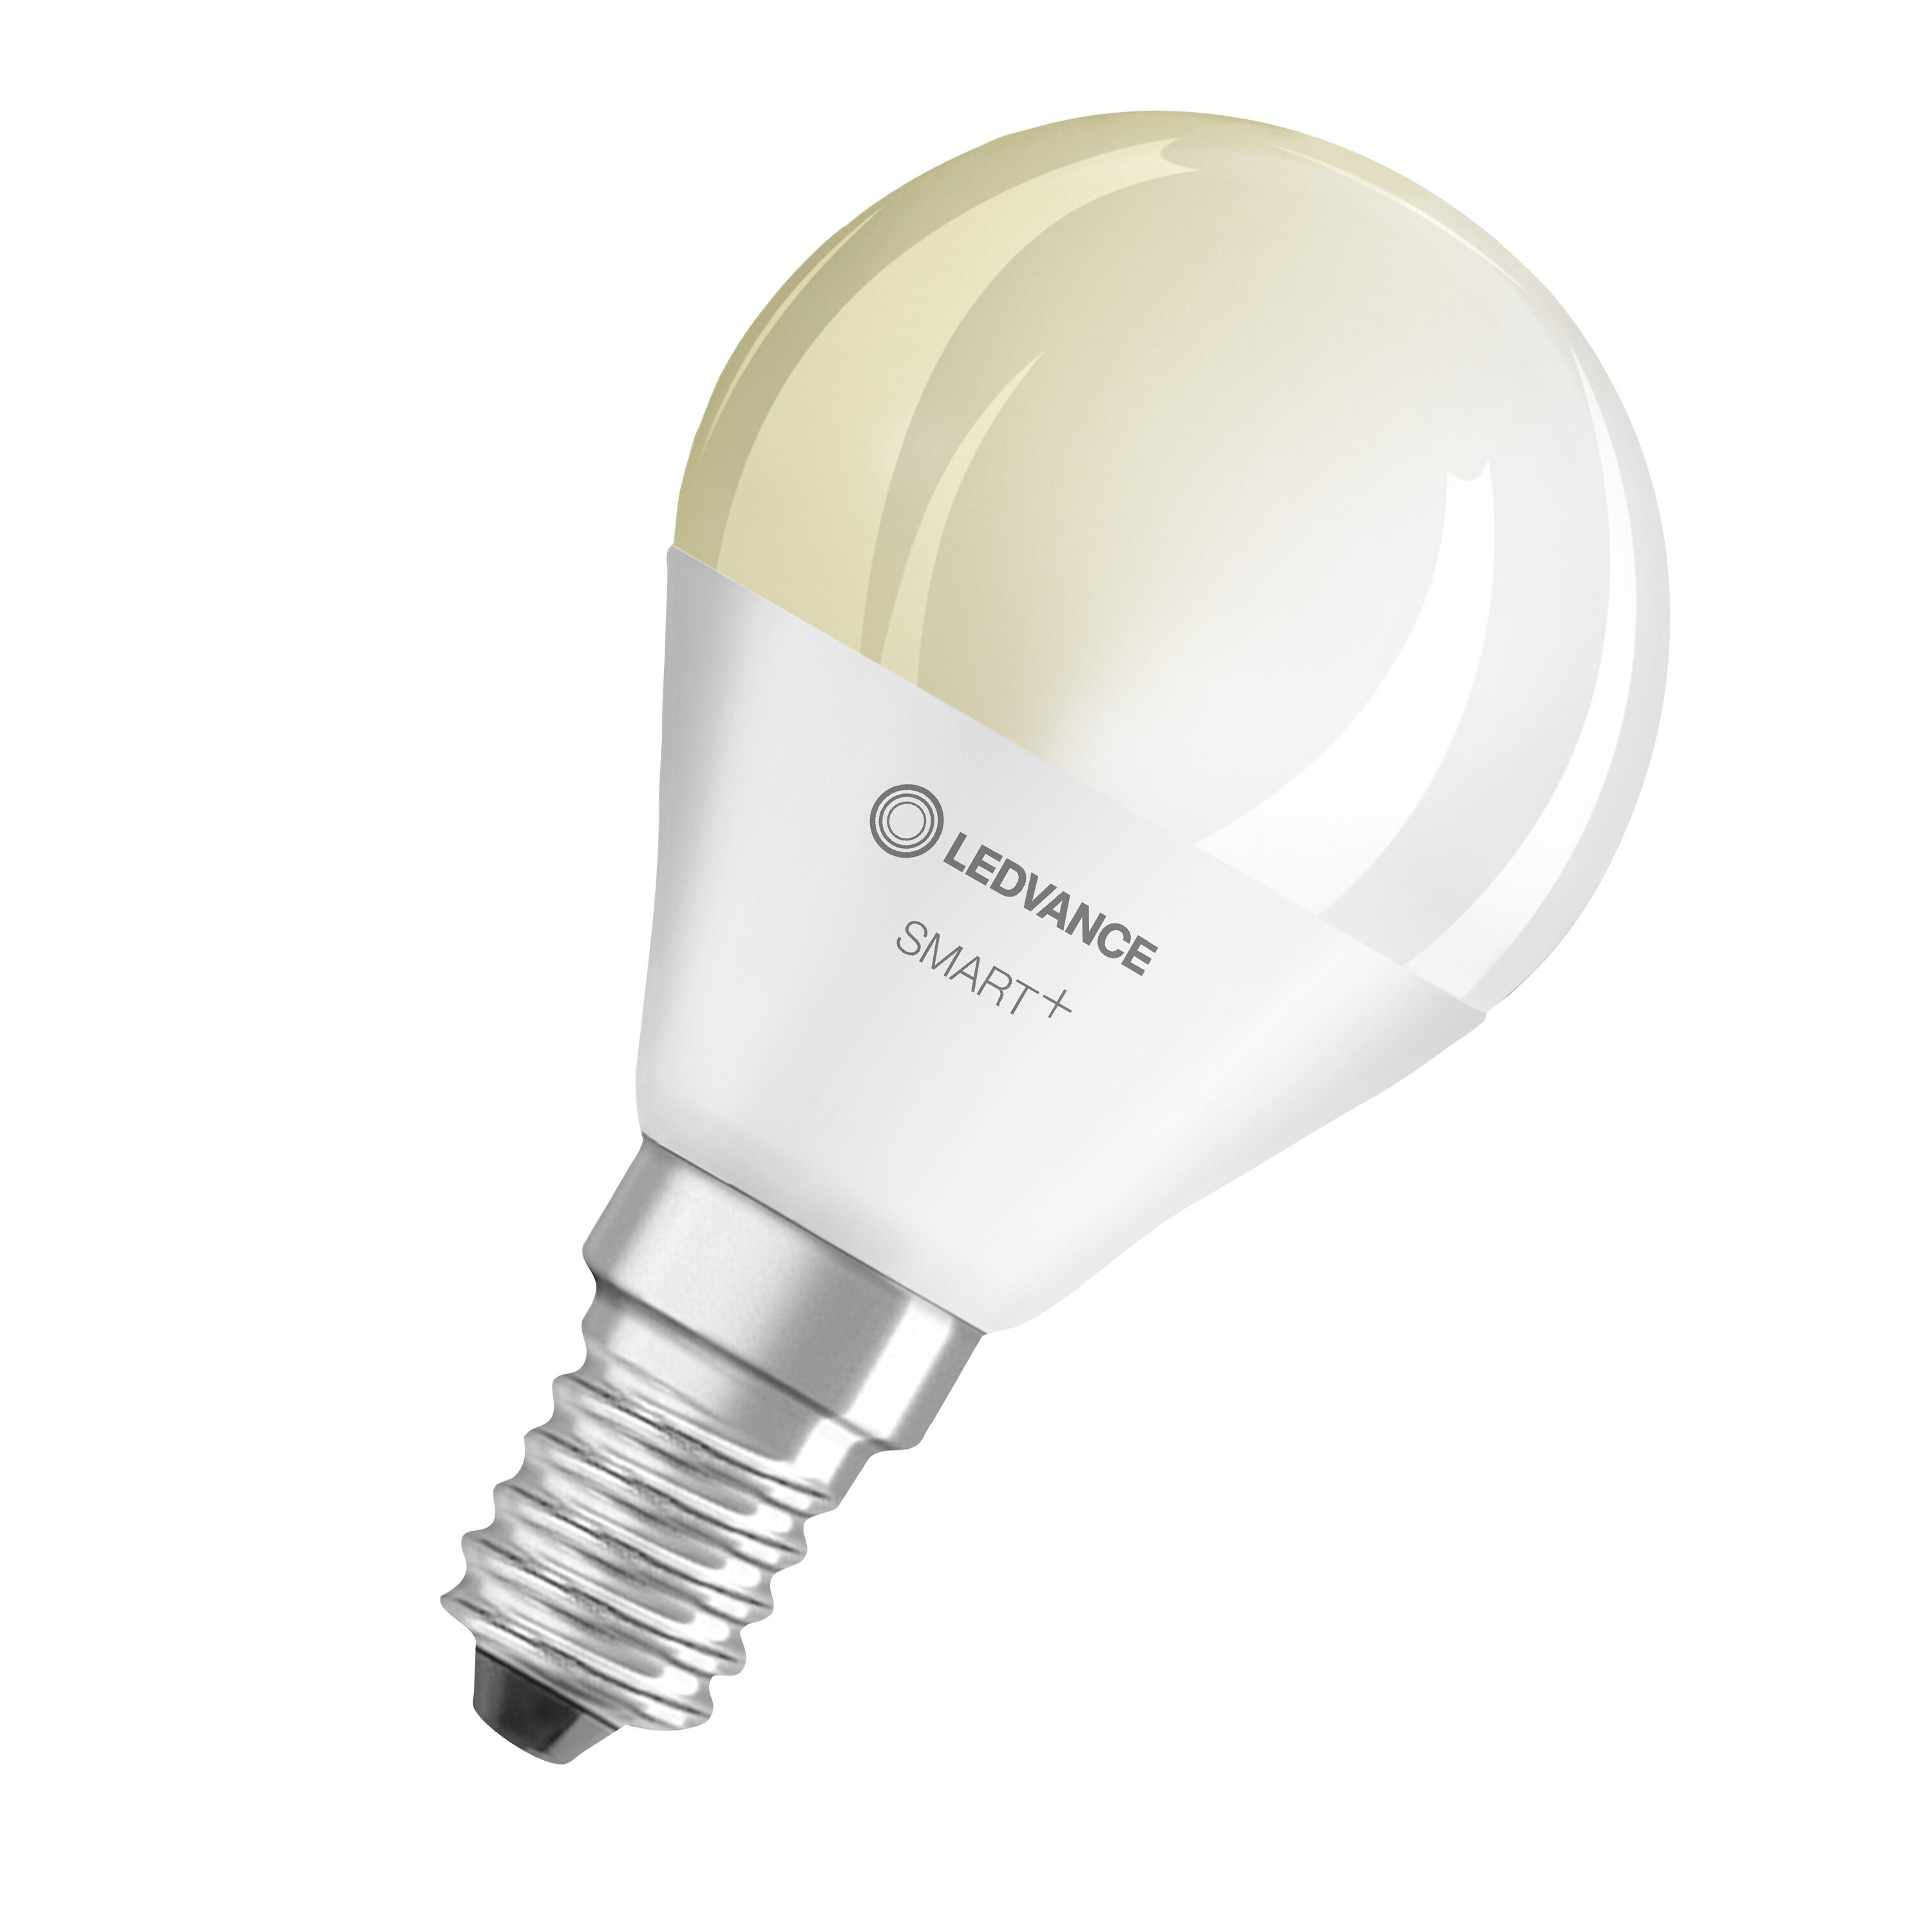 Mini Bulb LEDVANCE SMART+ Lampe WiFi Warmweiß Dimmable LED Smarte